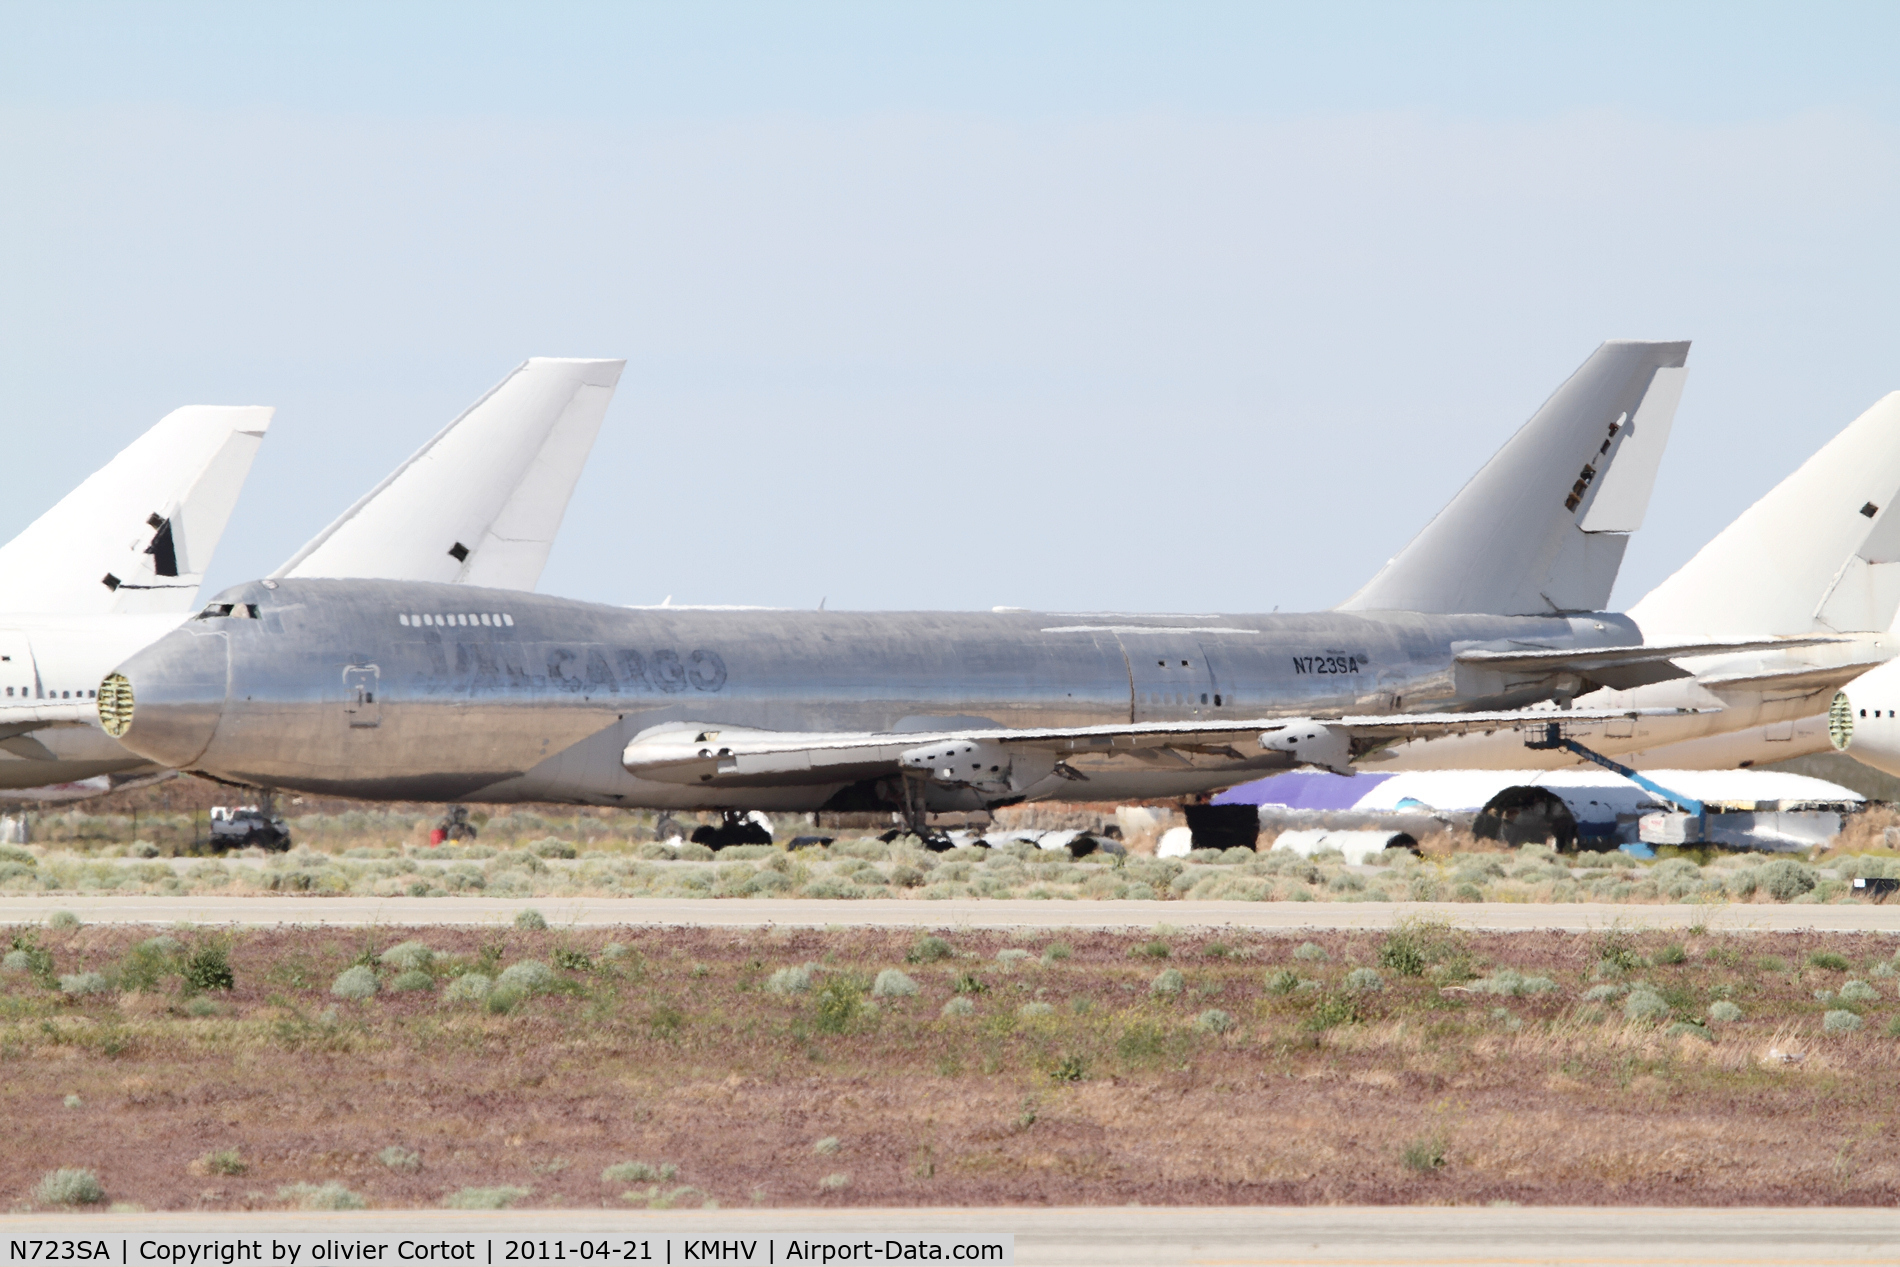 N723SA, 1987 Boeing 747-246F C/N 23641, In the heat of Mojave...